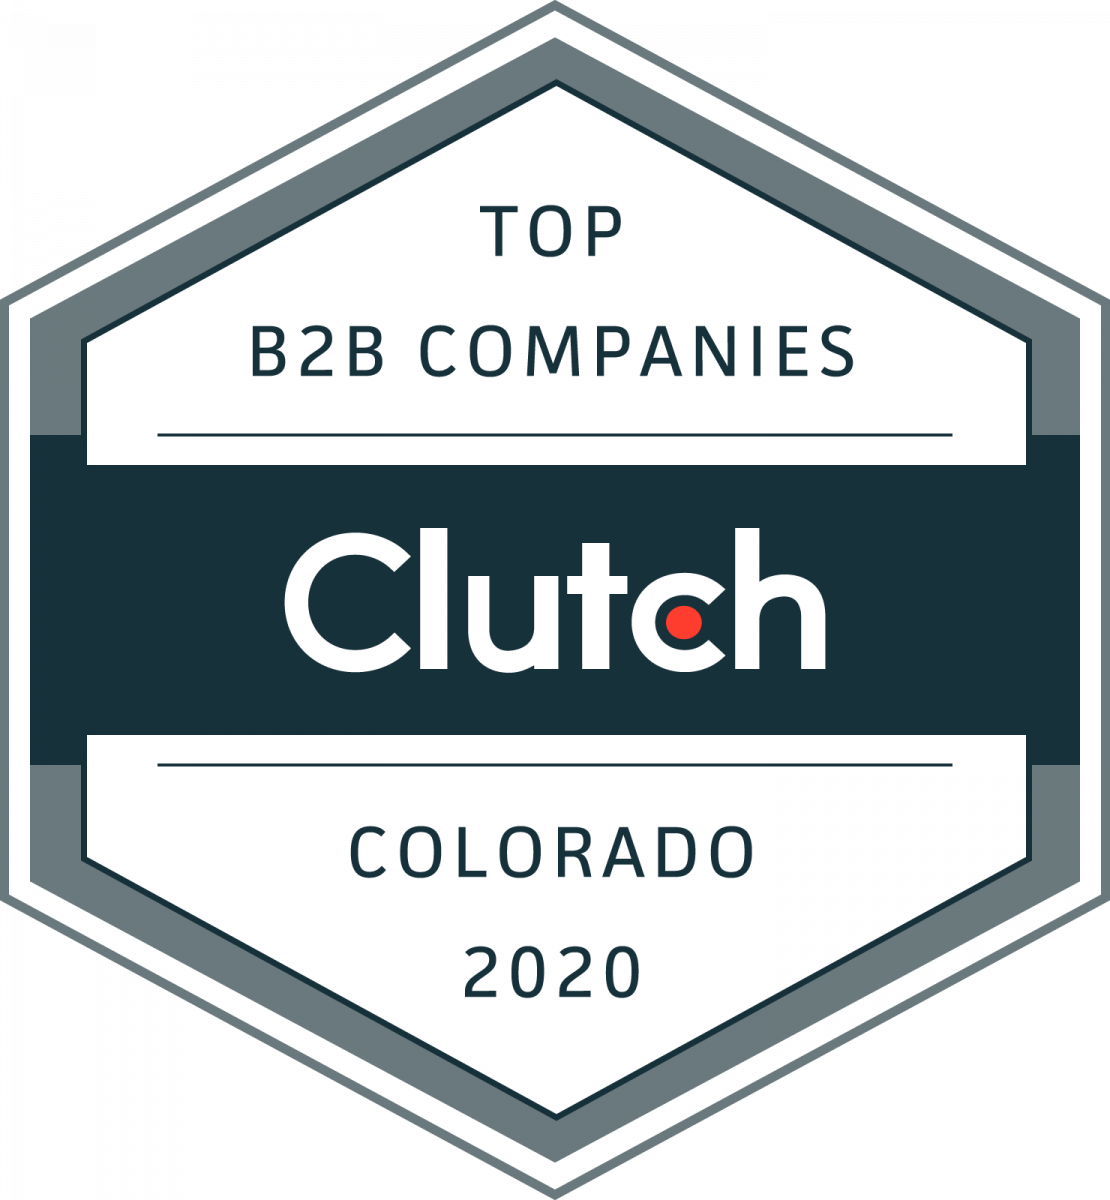 Top B2B Companies Colorado